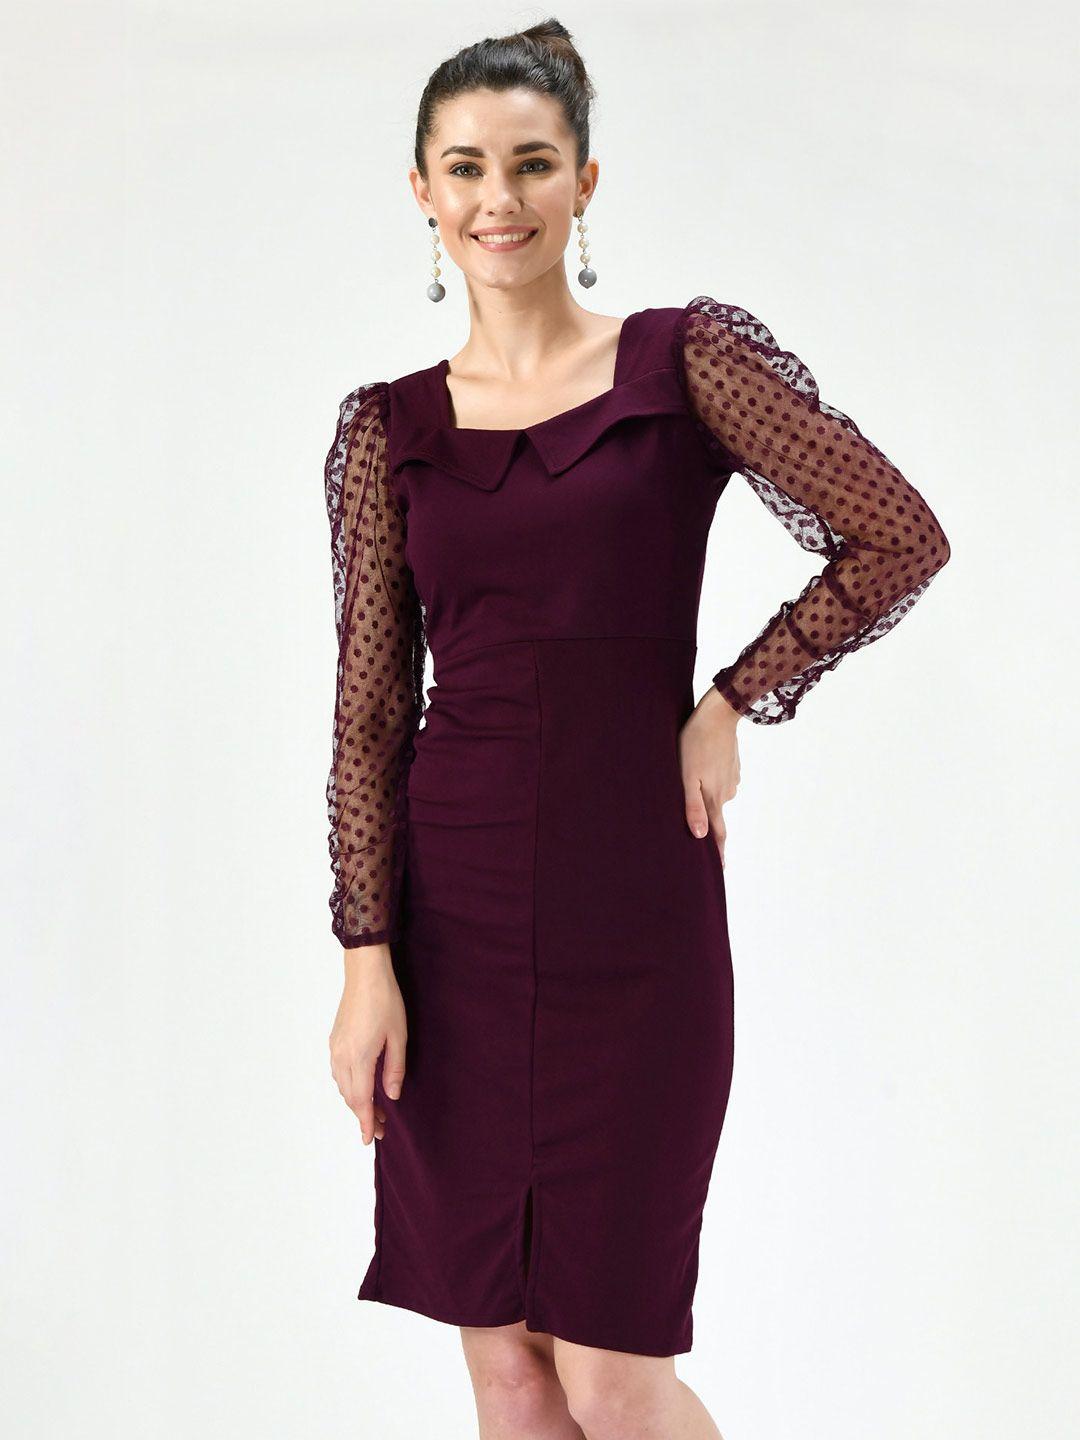 moshe purple sheath dress